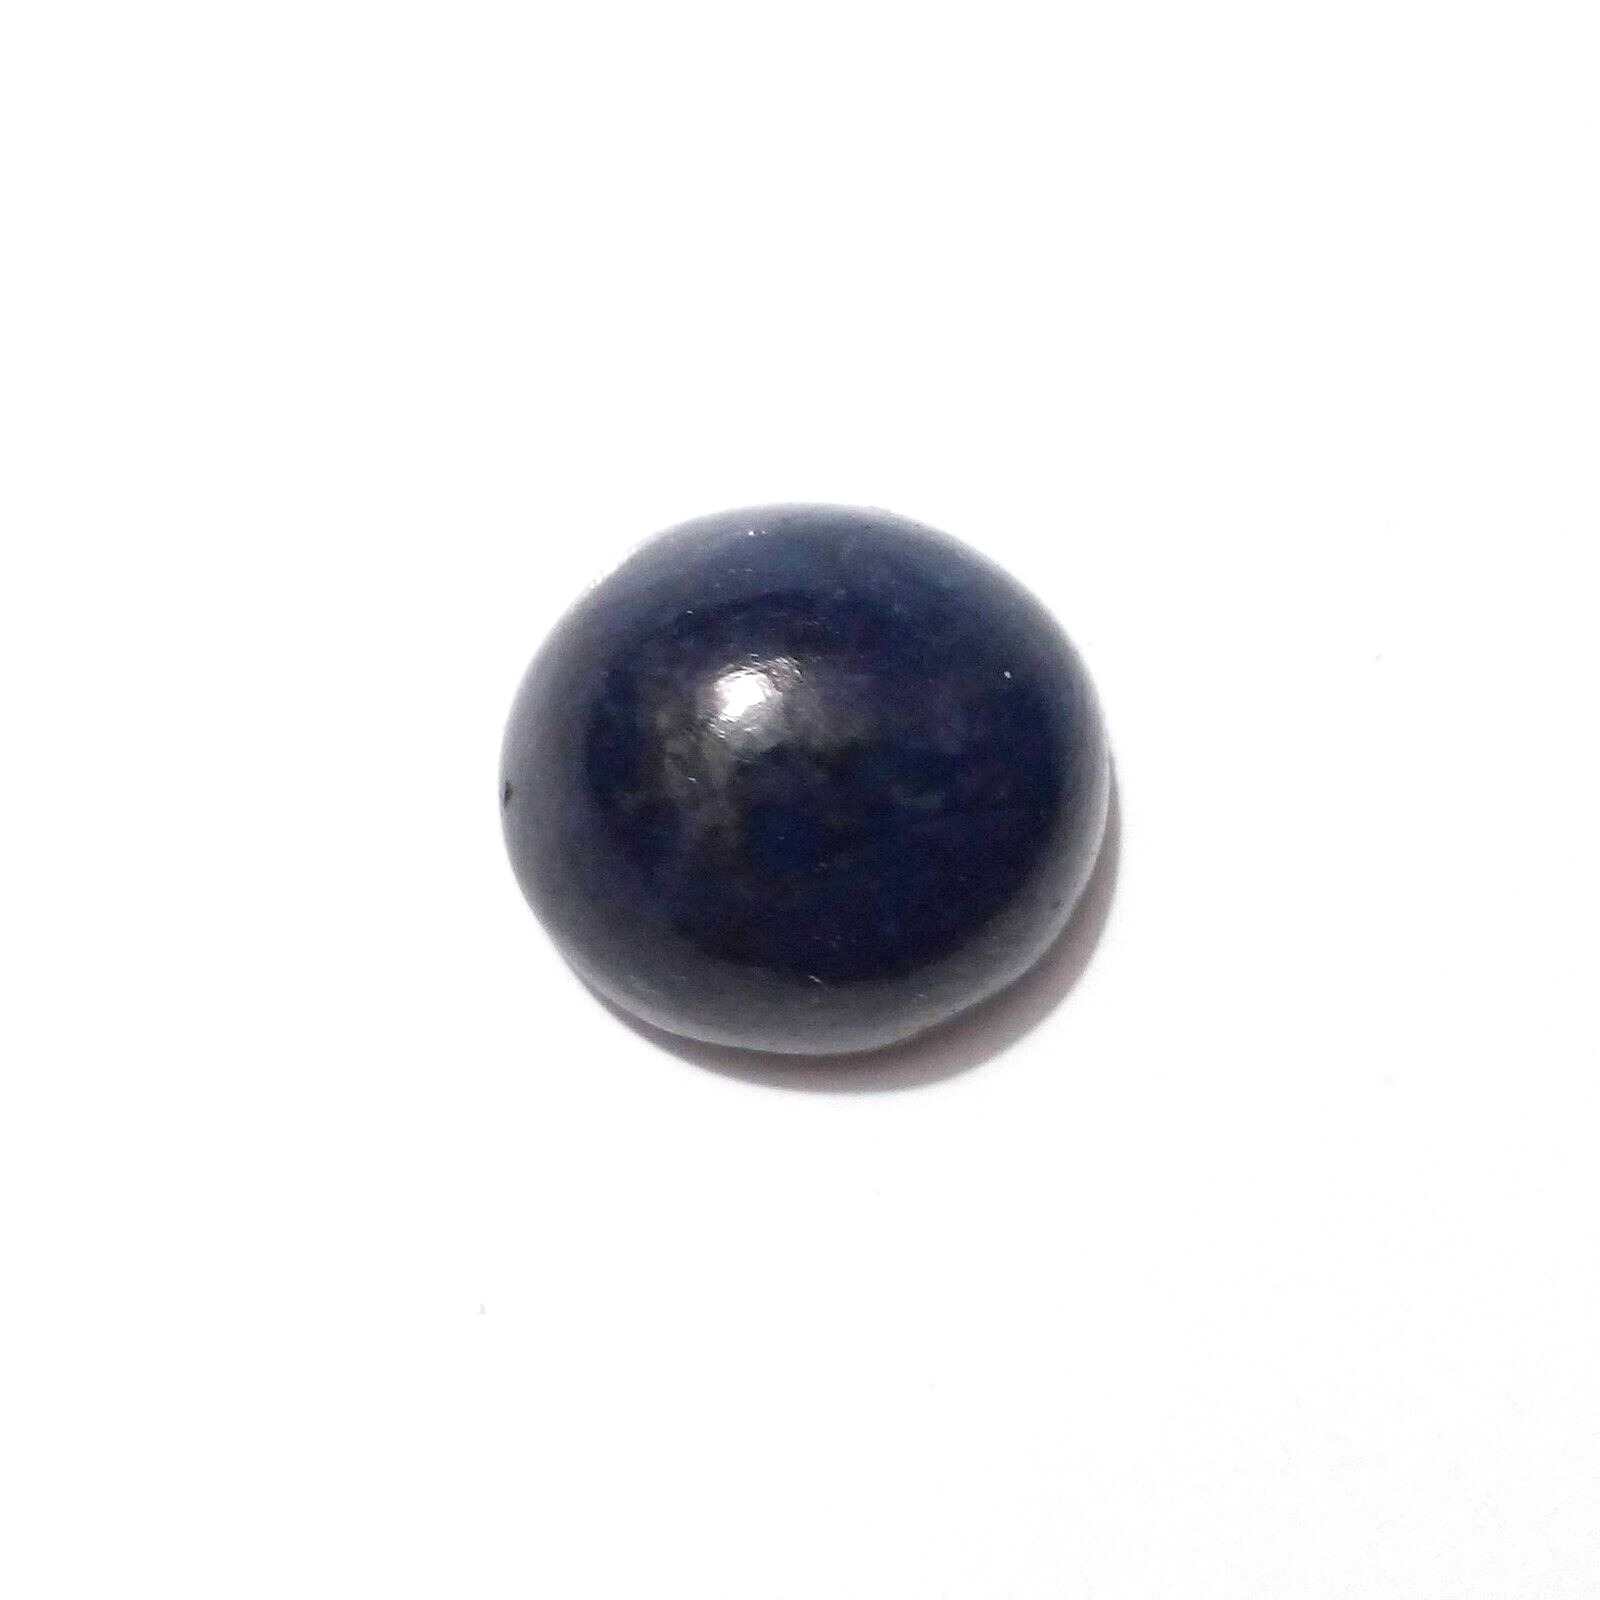 Attractive Madagascar Blue Sapphire Cabochon 8.64 Crt Oval Shape Loose Gemstone